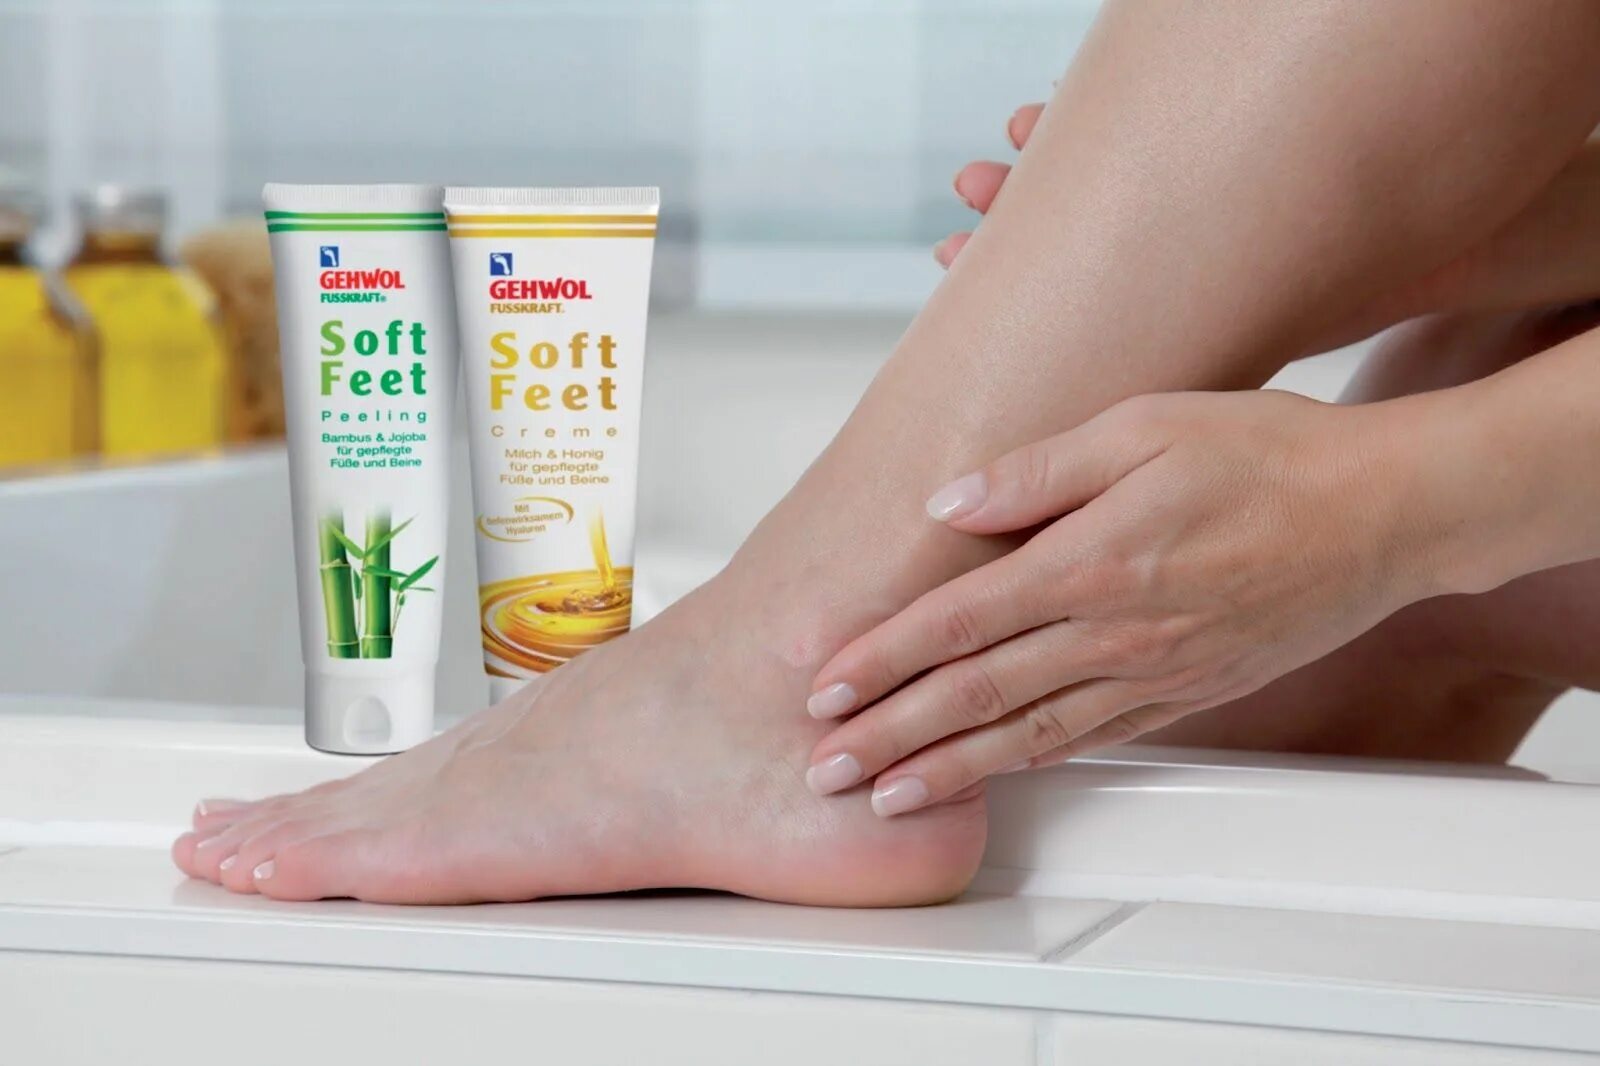 Печет подошва ног. Gehwol Soft feet Creme. Gehwol Gerlachs foot Cream крем для уставших ног 55мл. Пилинг бамбук и жожоба - Gehwol (Геволь) Soft feet peeling 500ml. Ношгипри сахарншом диабетше.